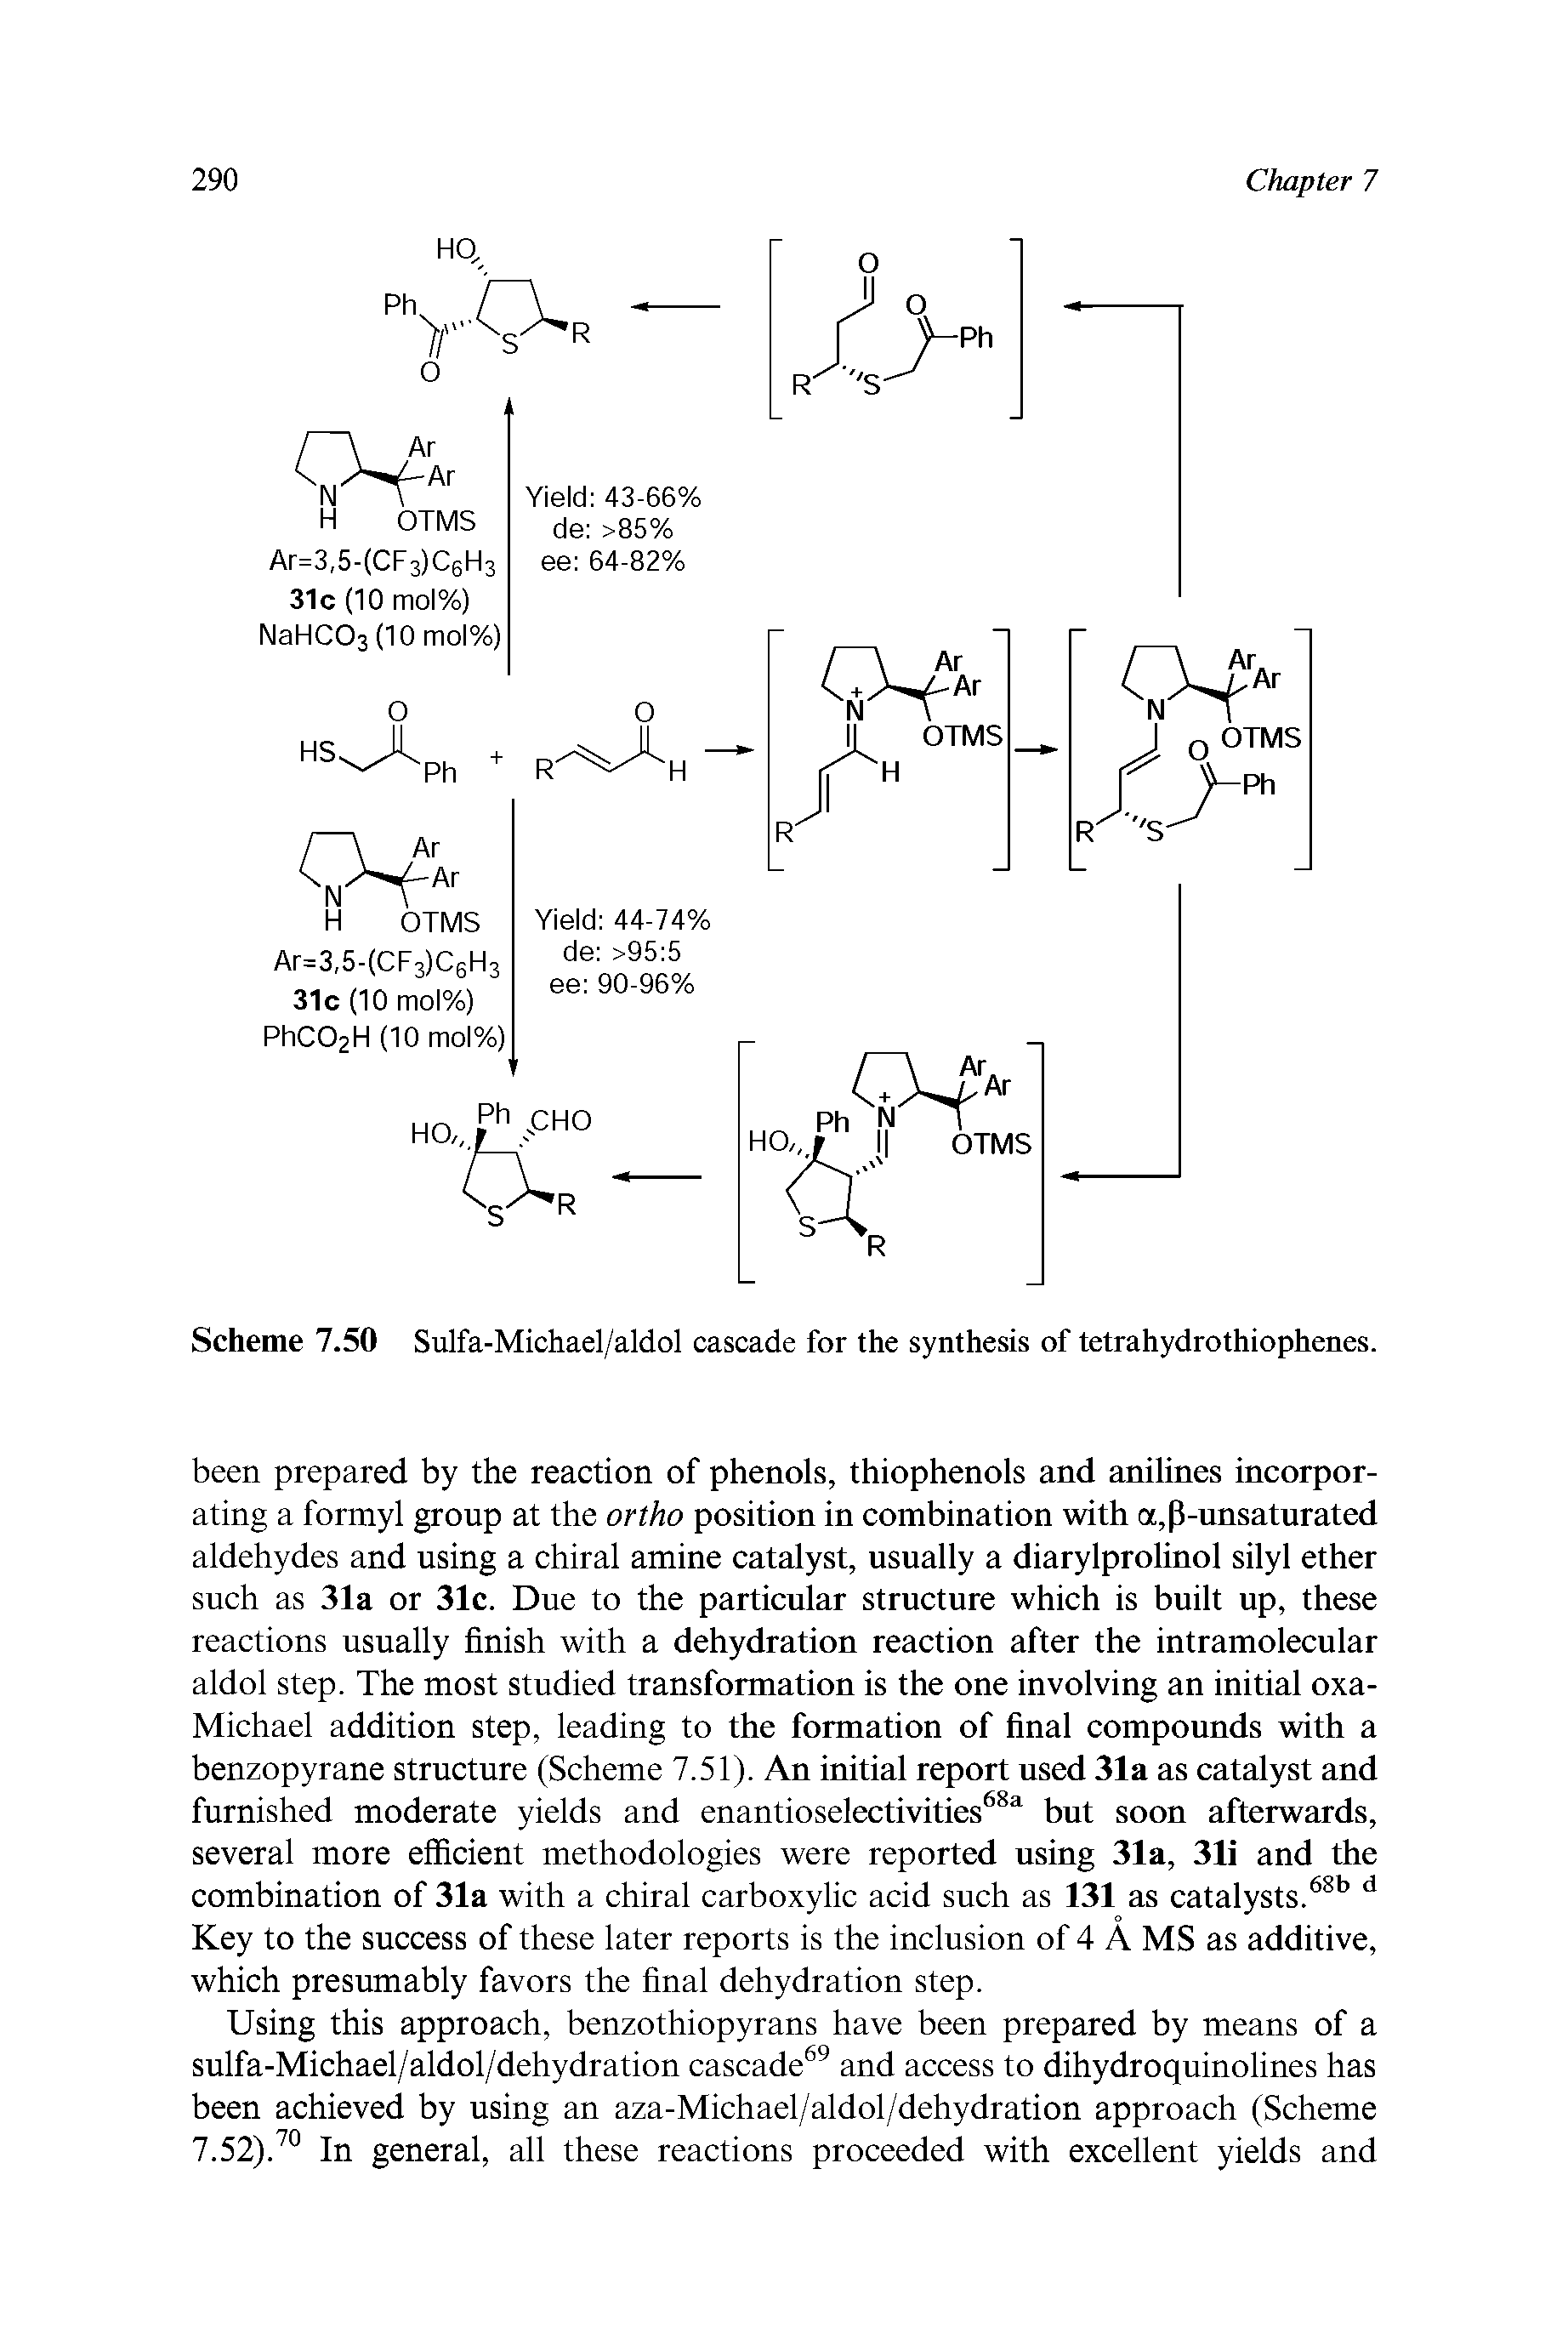 Scheme 7.50 Sxilfa-Michael/aldol cascade for the synthesis of tetrahydrothiophenes.